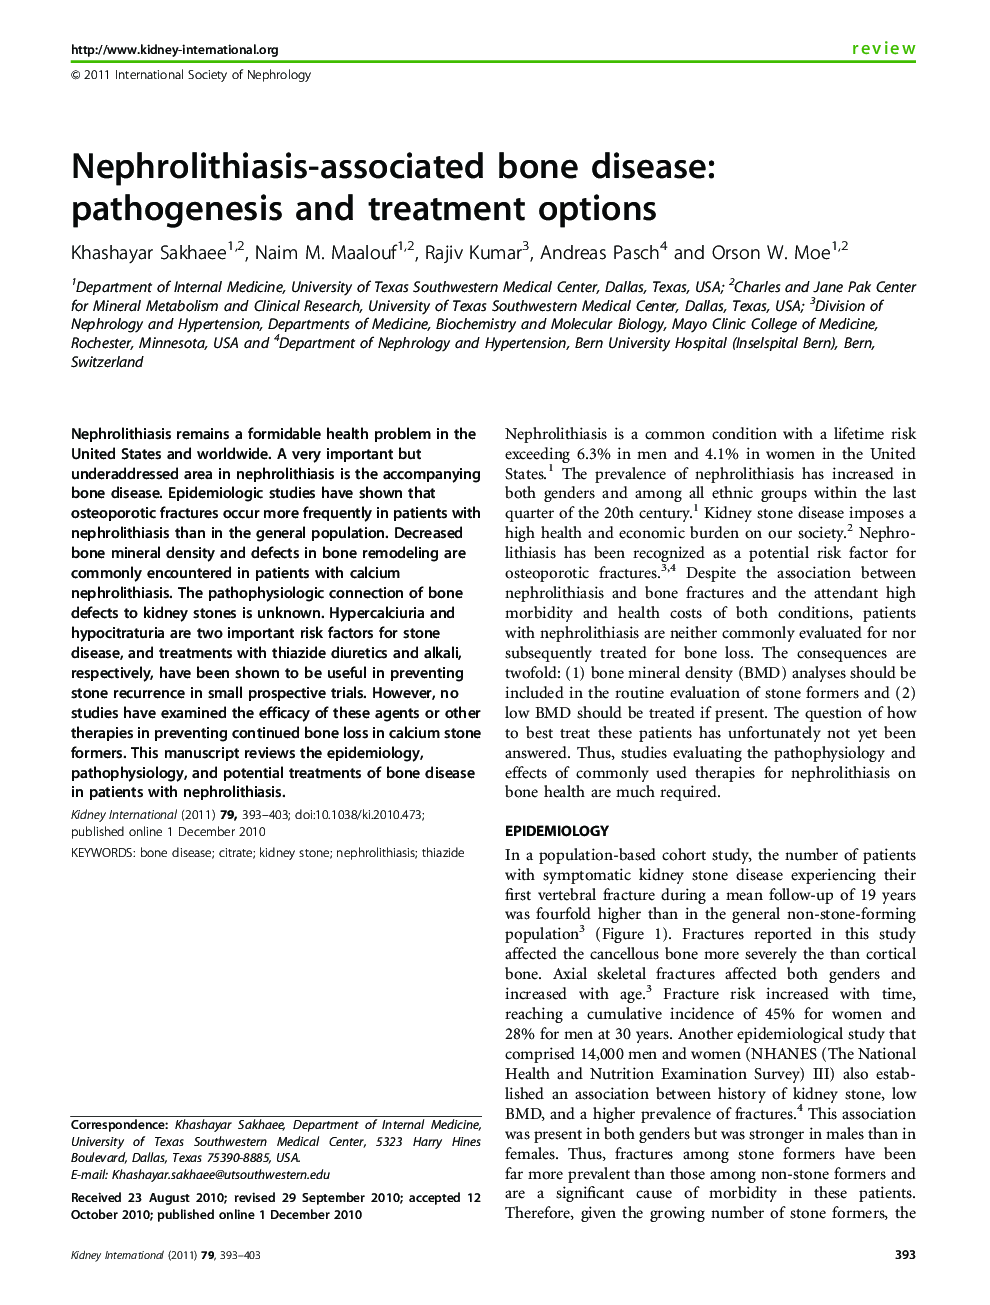 Nephrolithiasis-associated bone disease: pathogenesis and treatment options 